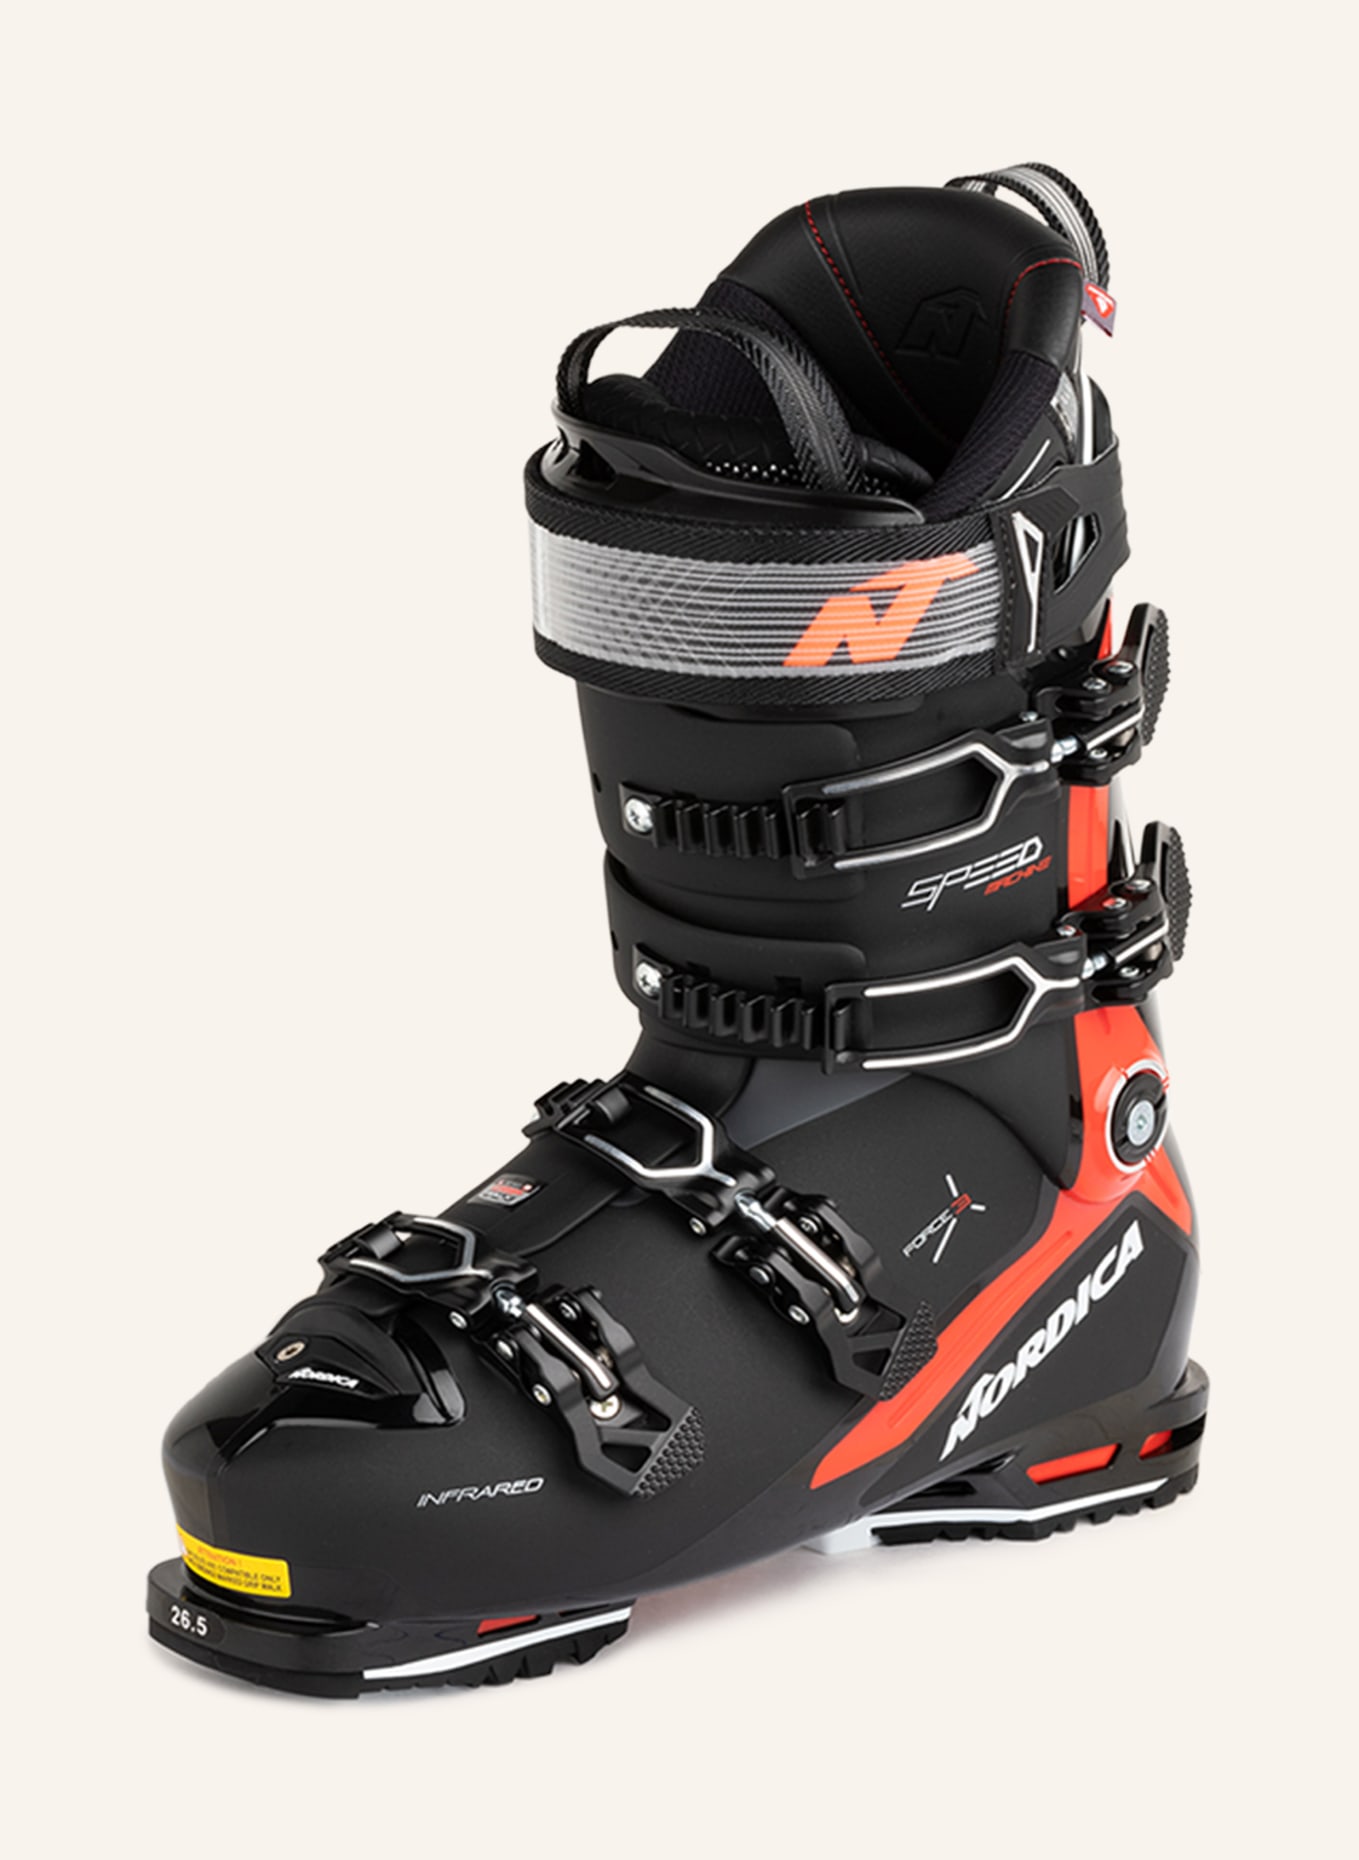 NORDICA Ski boots SPEED MACHINE 3 130 GW in black/ red/ dark gray